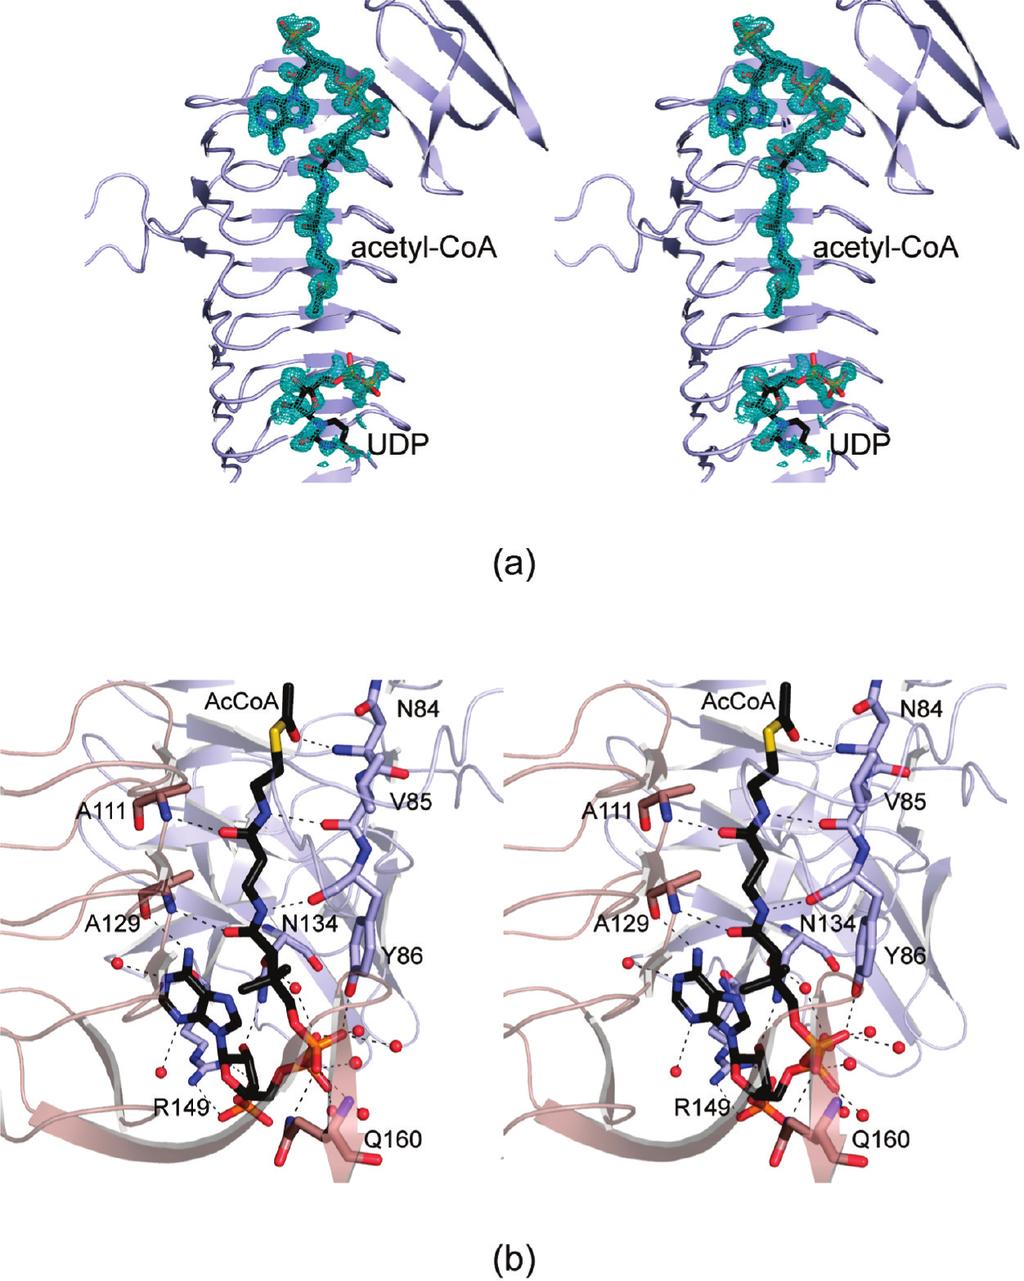 Article Biochemistry, Vol. 49, No. 22, 2010 4649 FIGURE 3: Active site architecture of the WlbB-acetyl-CoA-UDP complex model.